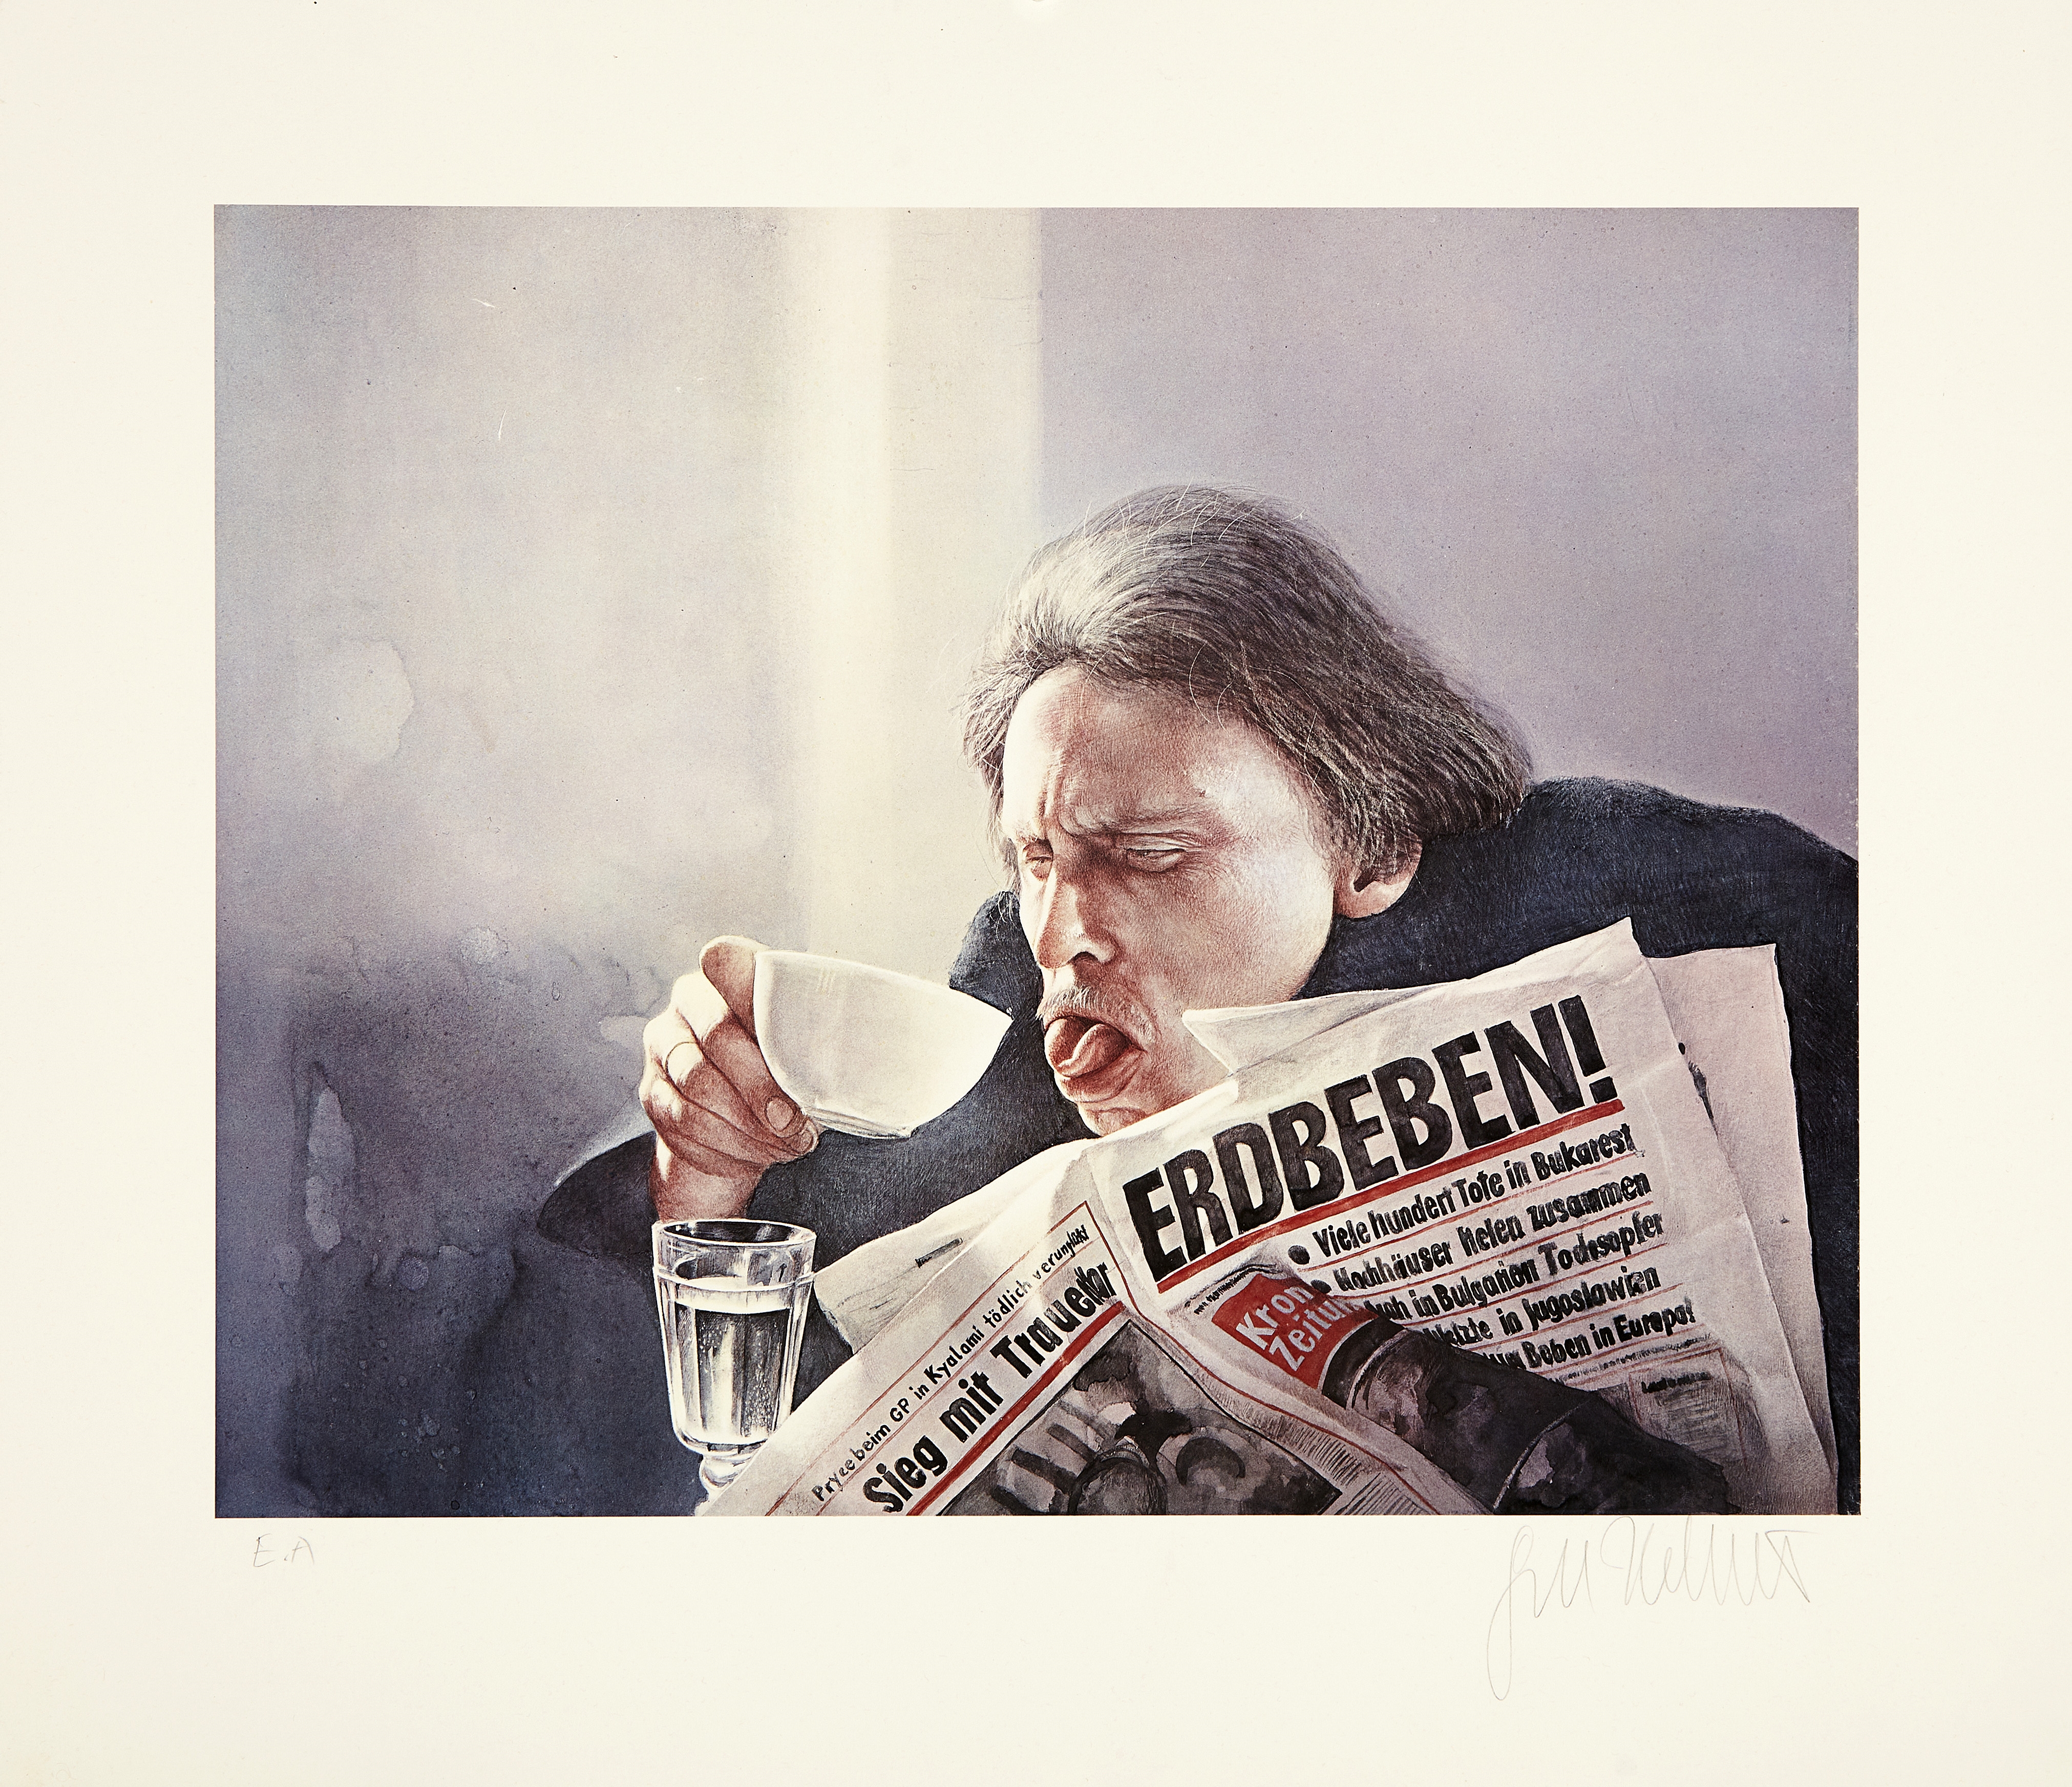 Artwork by Gottfried Helnwein, Leitartikel Erdbeben, Made of Color lithograph on laid paper